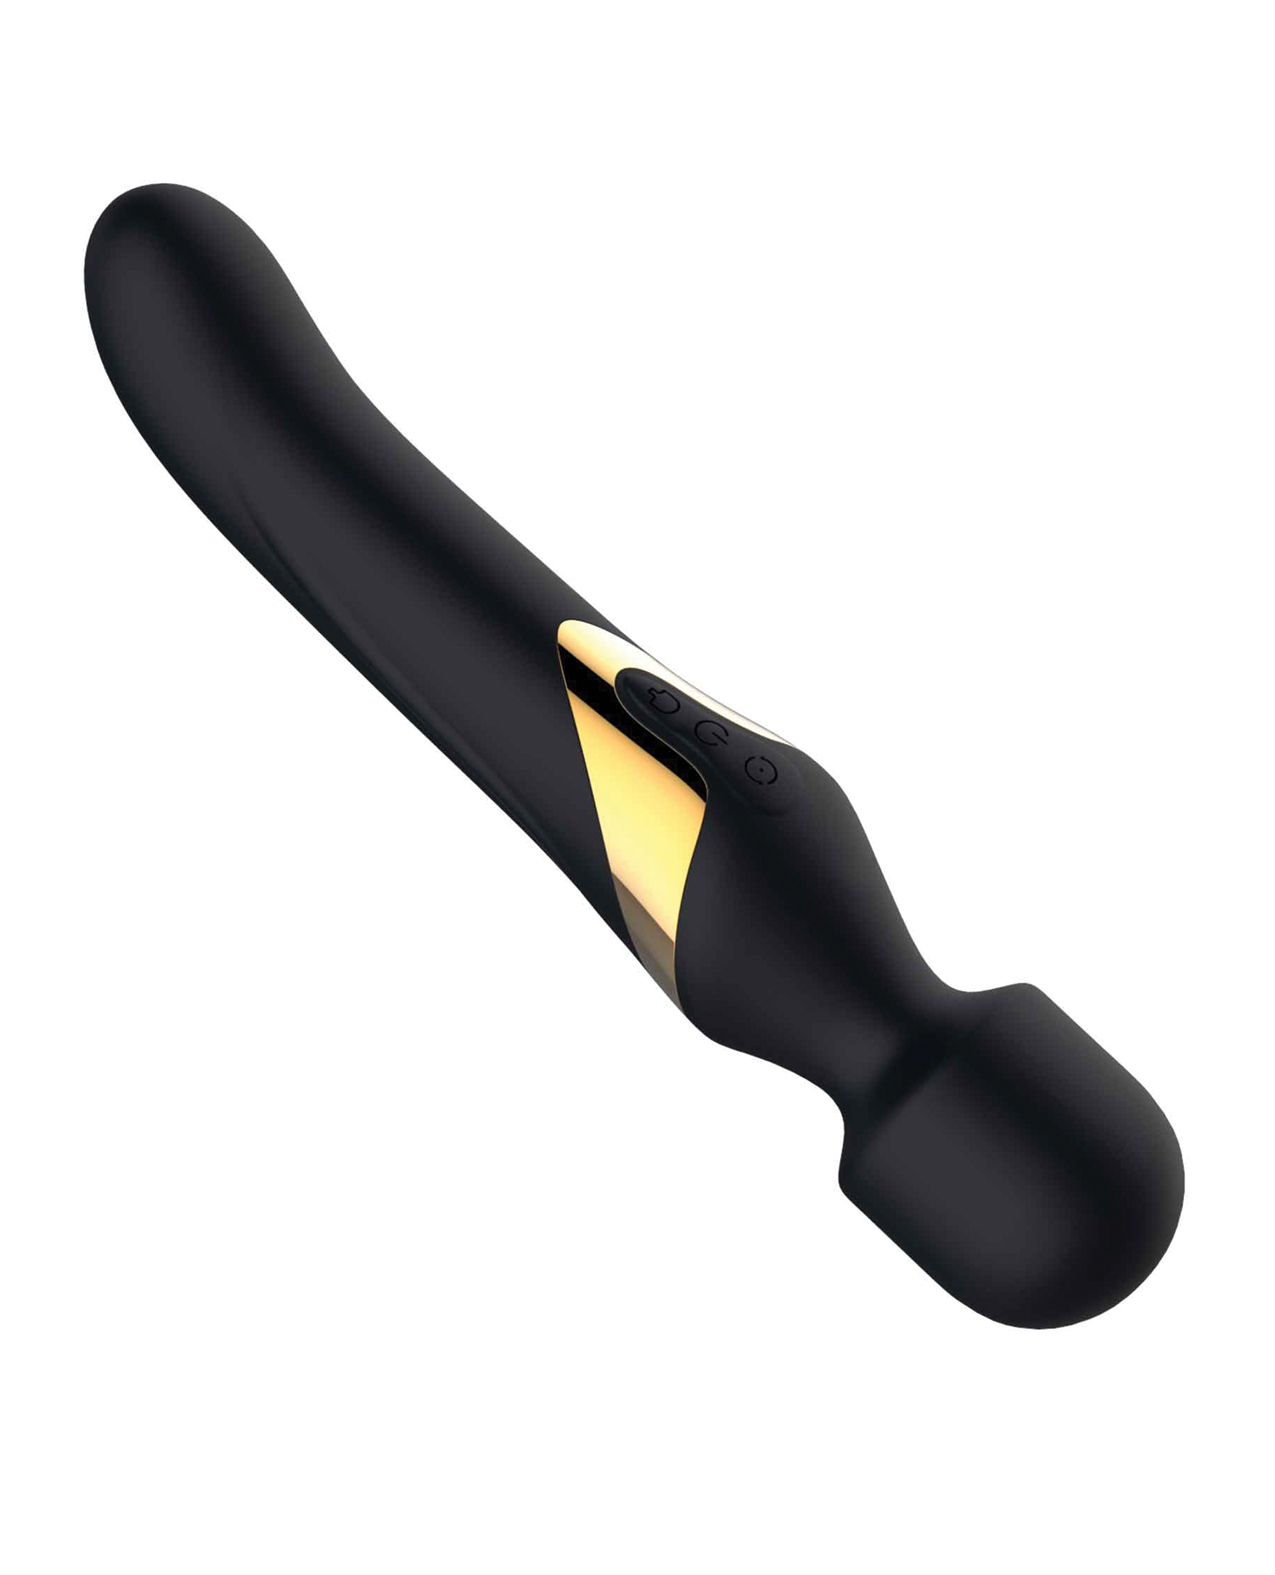 Buy Best Dorcel Dual Orgasms Wand Vibrator - Black/Gold